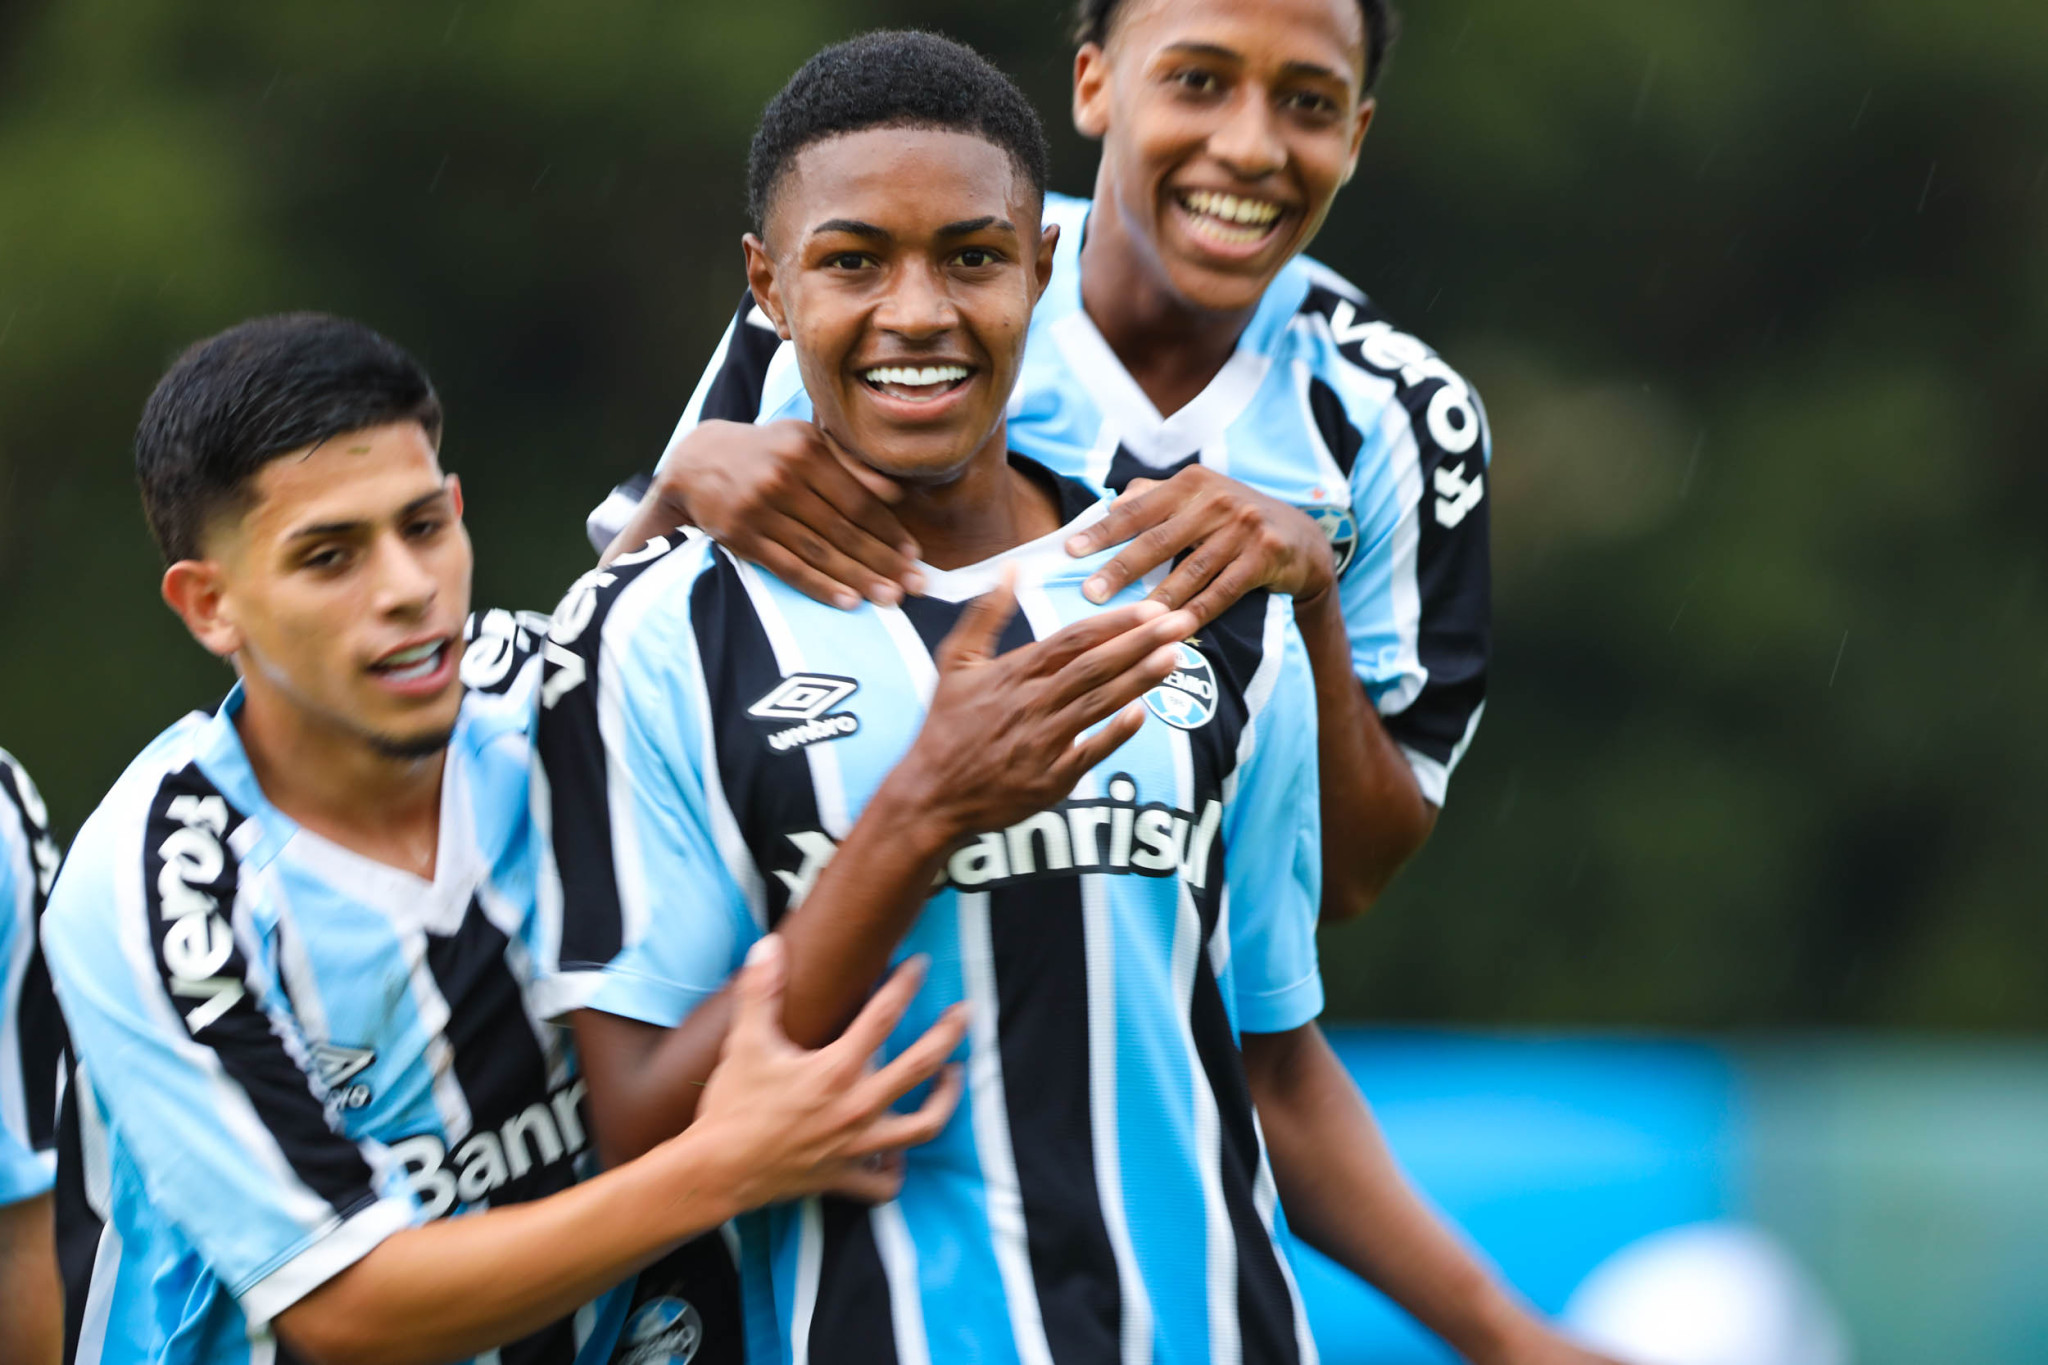 Tombense vs Villa Nova: A Clash of Minas Gerais Football Rivals